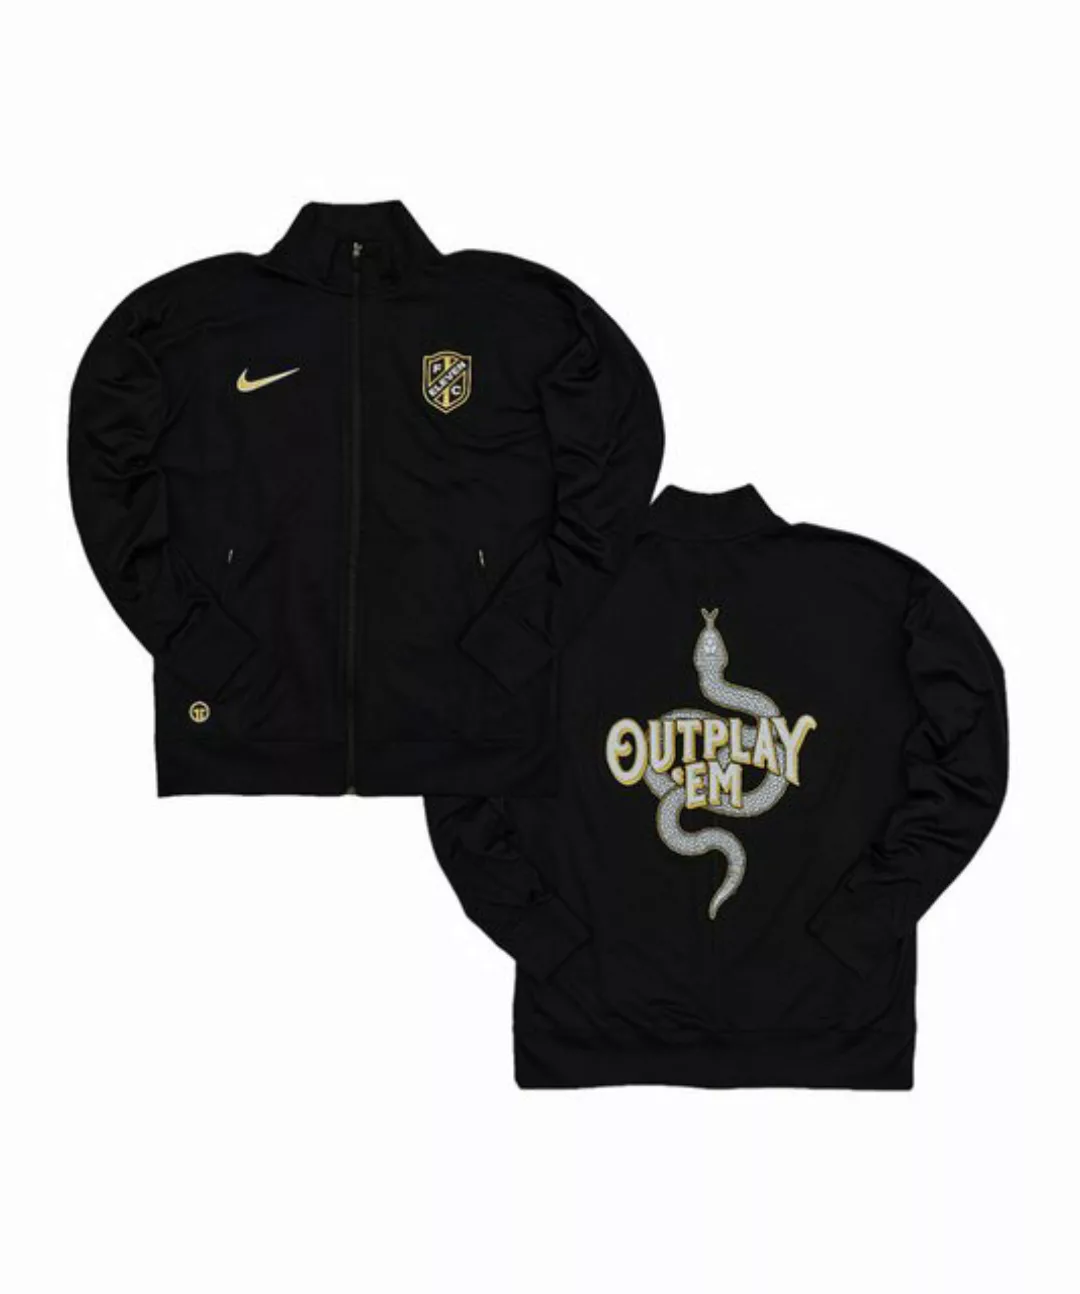 Nike Sweatjacke 11FC OUTPLAY 'EM Jacke günstig online kaufen